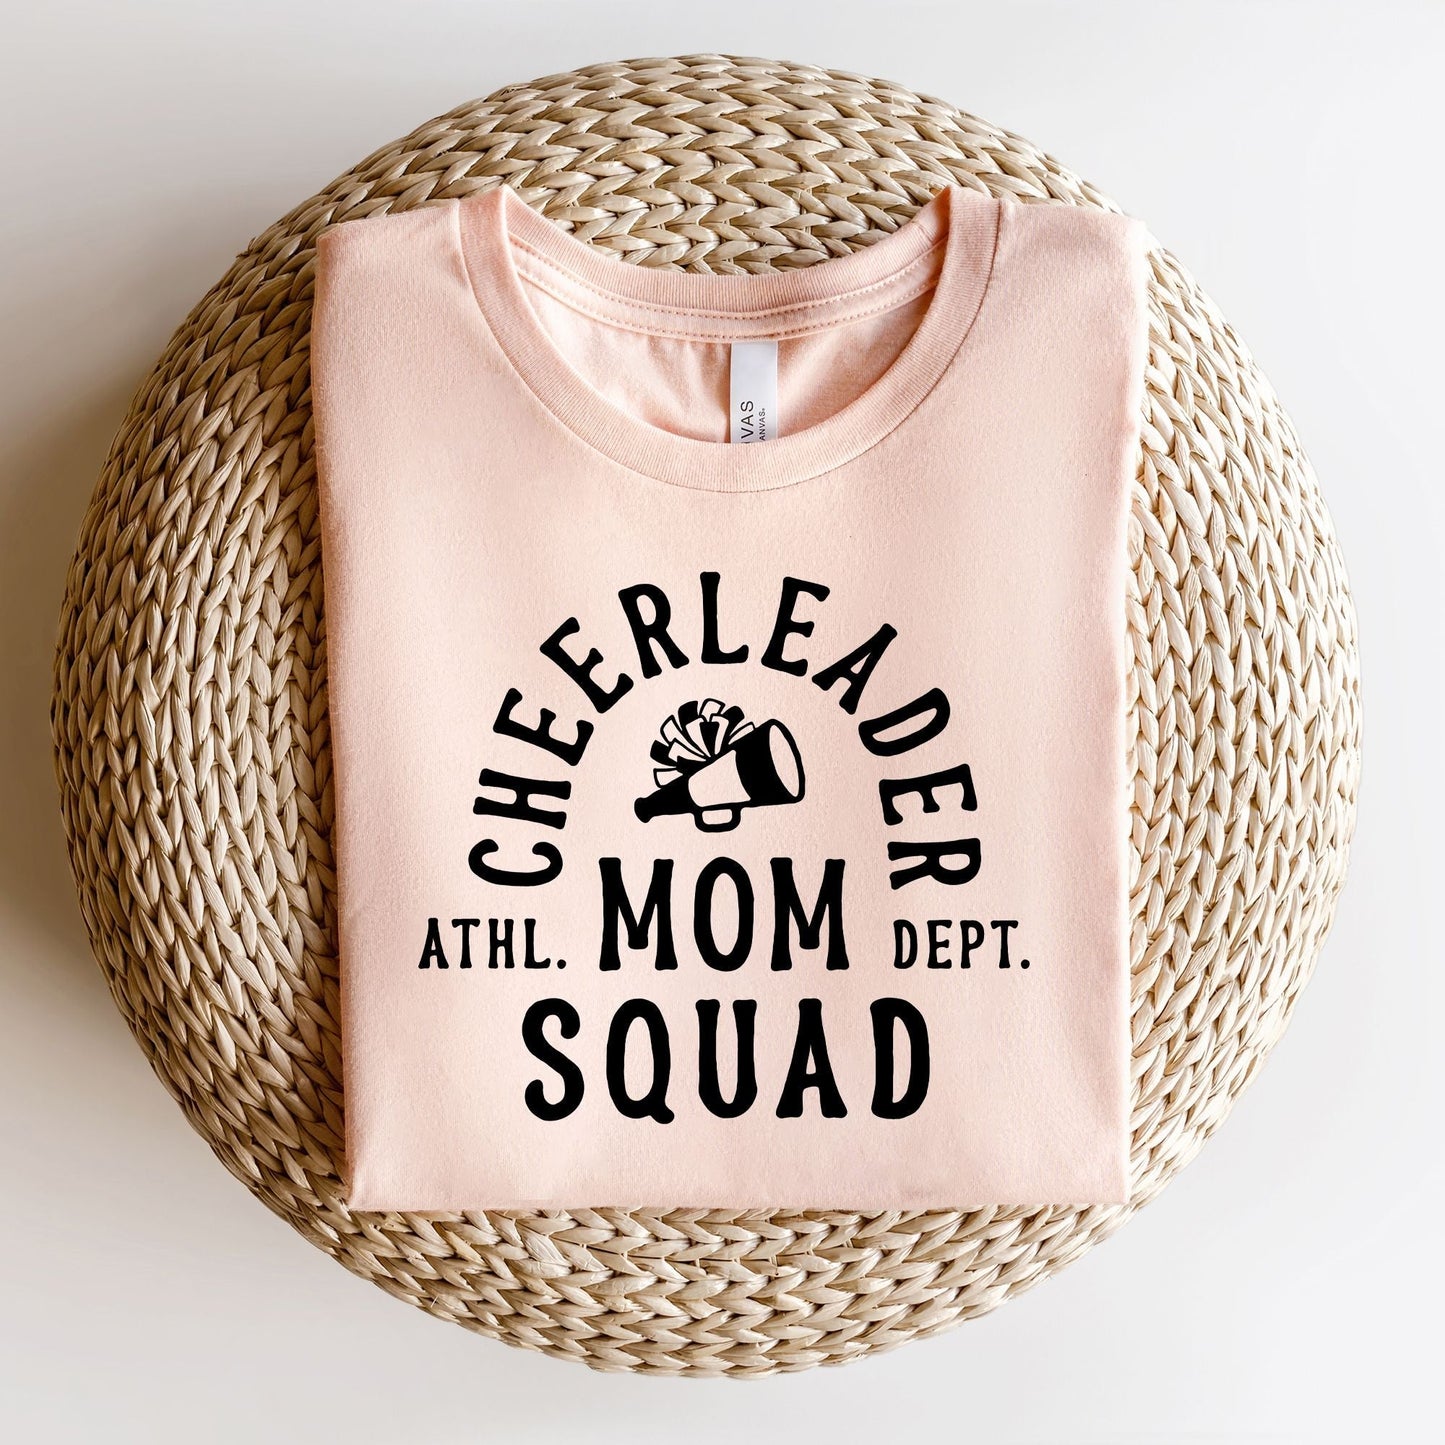 Cheerleader Mom Squad | Short Sleeve Crew Neck